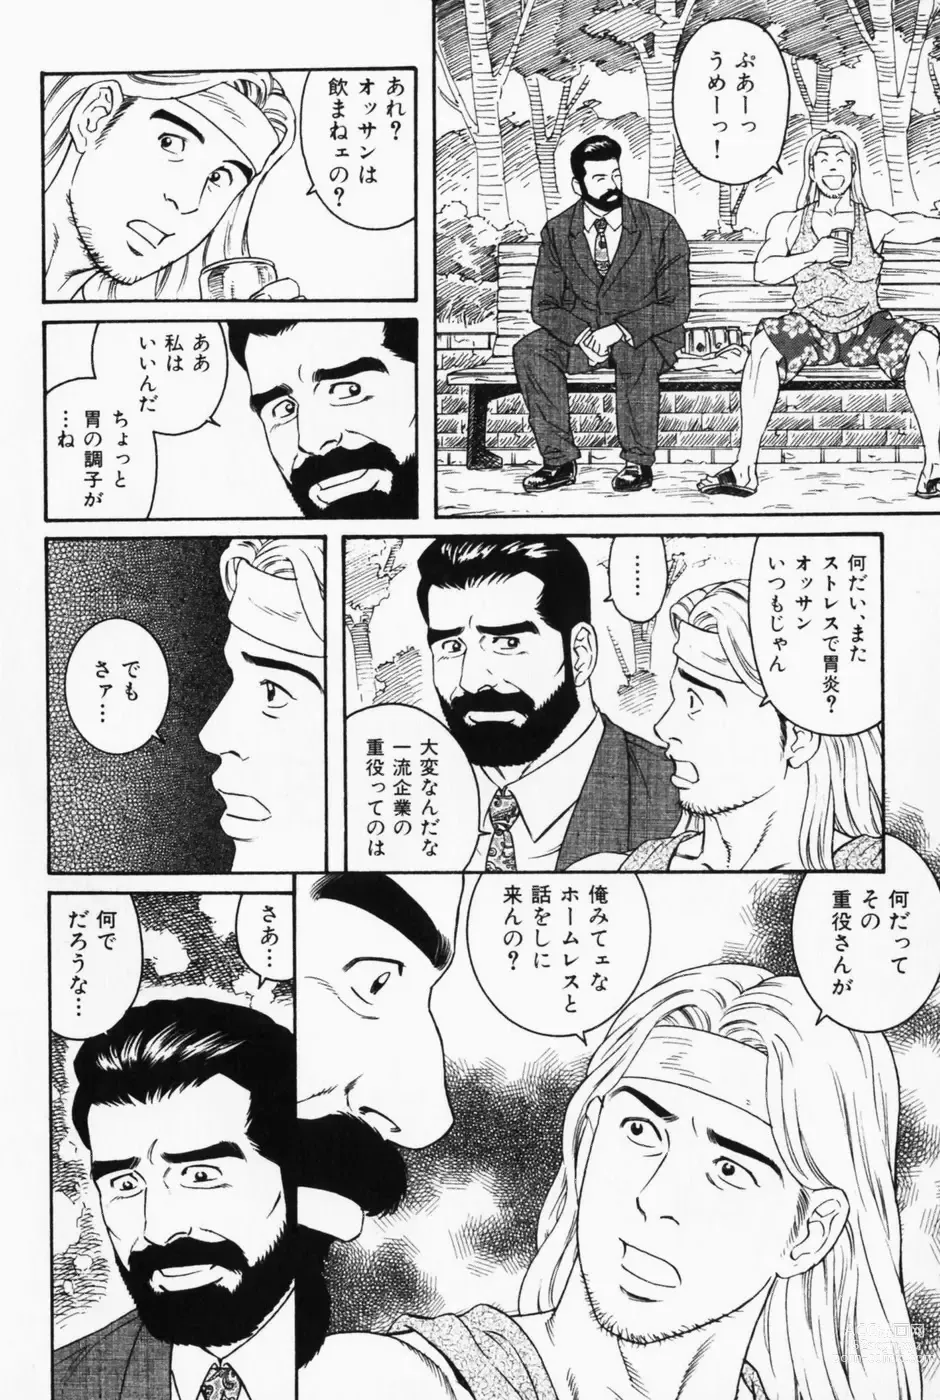 Page 4 of manga Shinkei-sei Ien